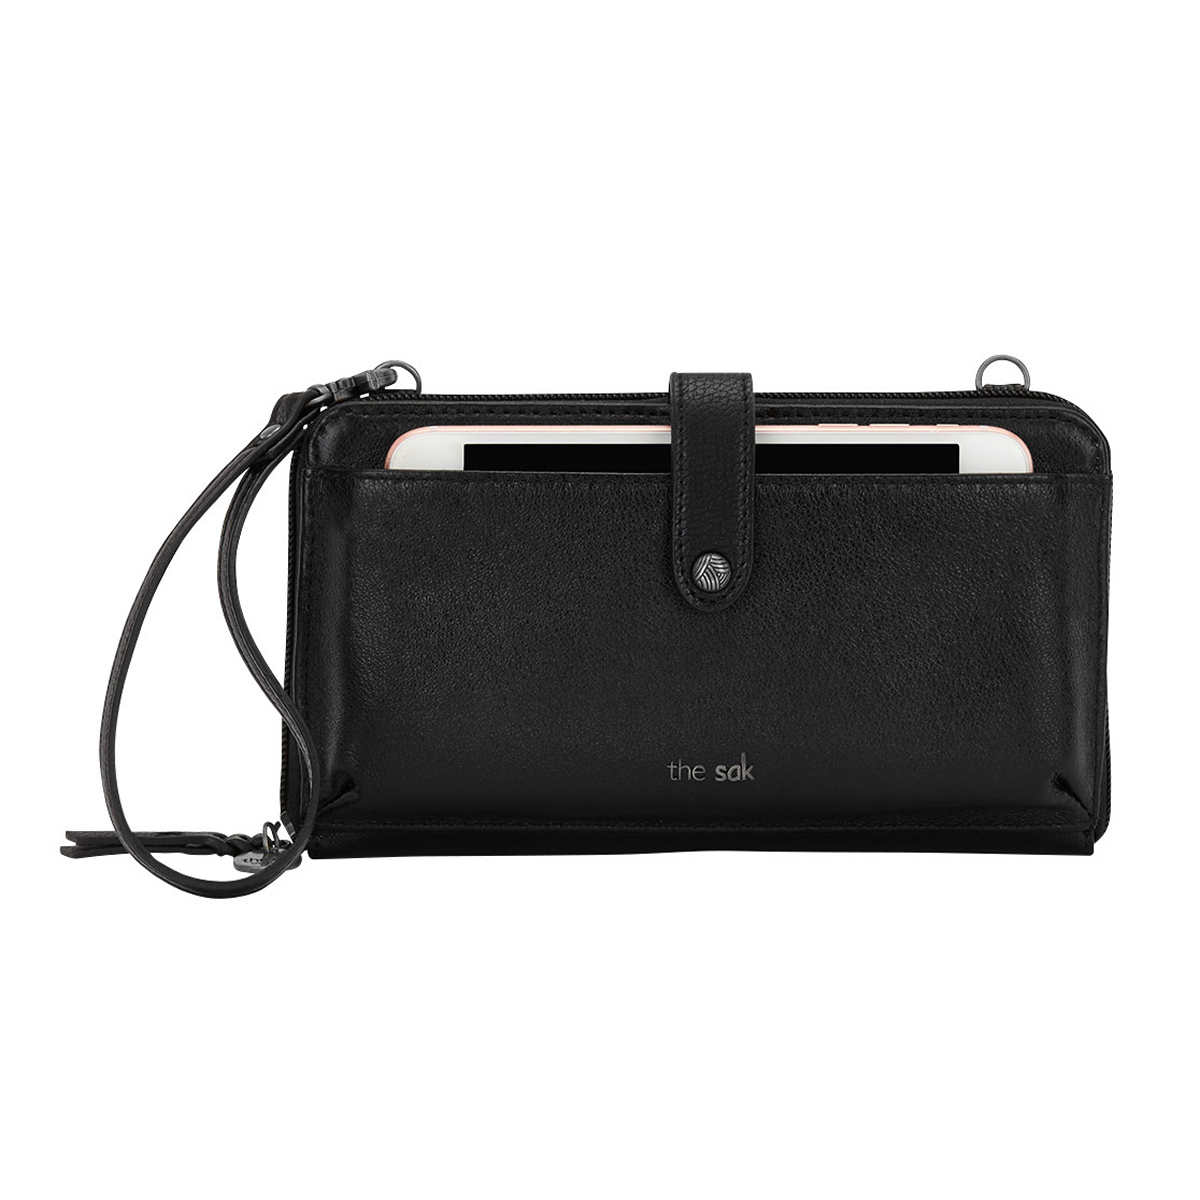 Wholesale hot sale leather cell phone holder sling bag mobile